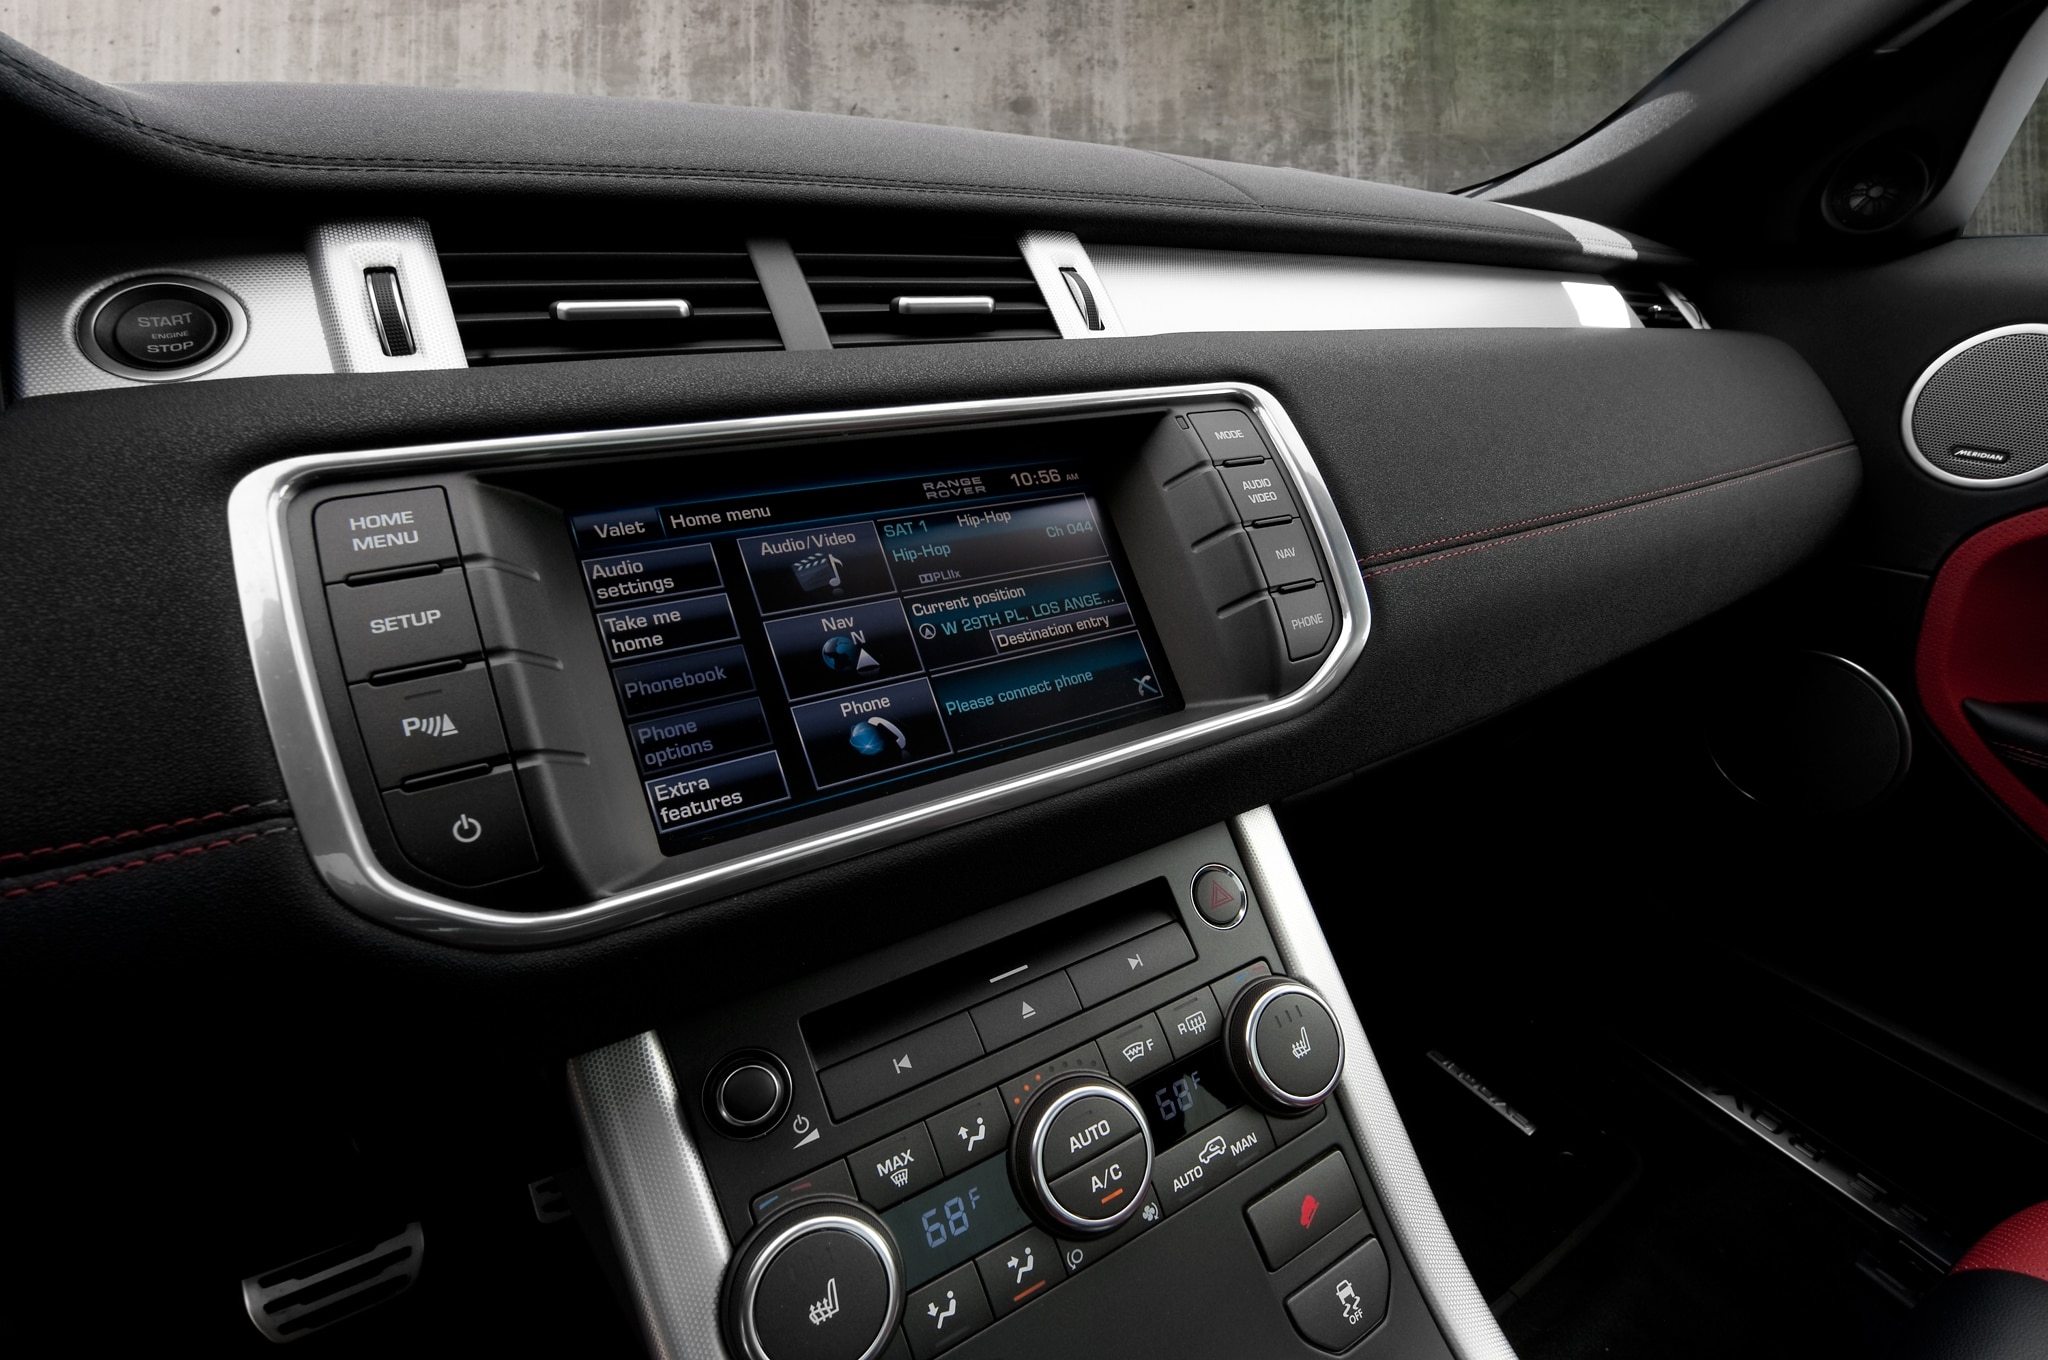 2012-Land-Rover-Range-Rover-Evoque-interior-dashboard.jpg